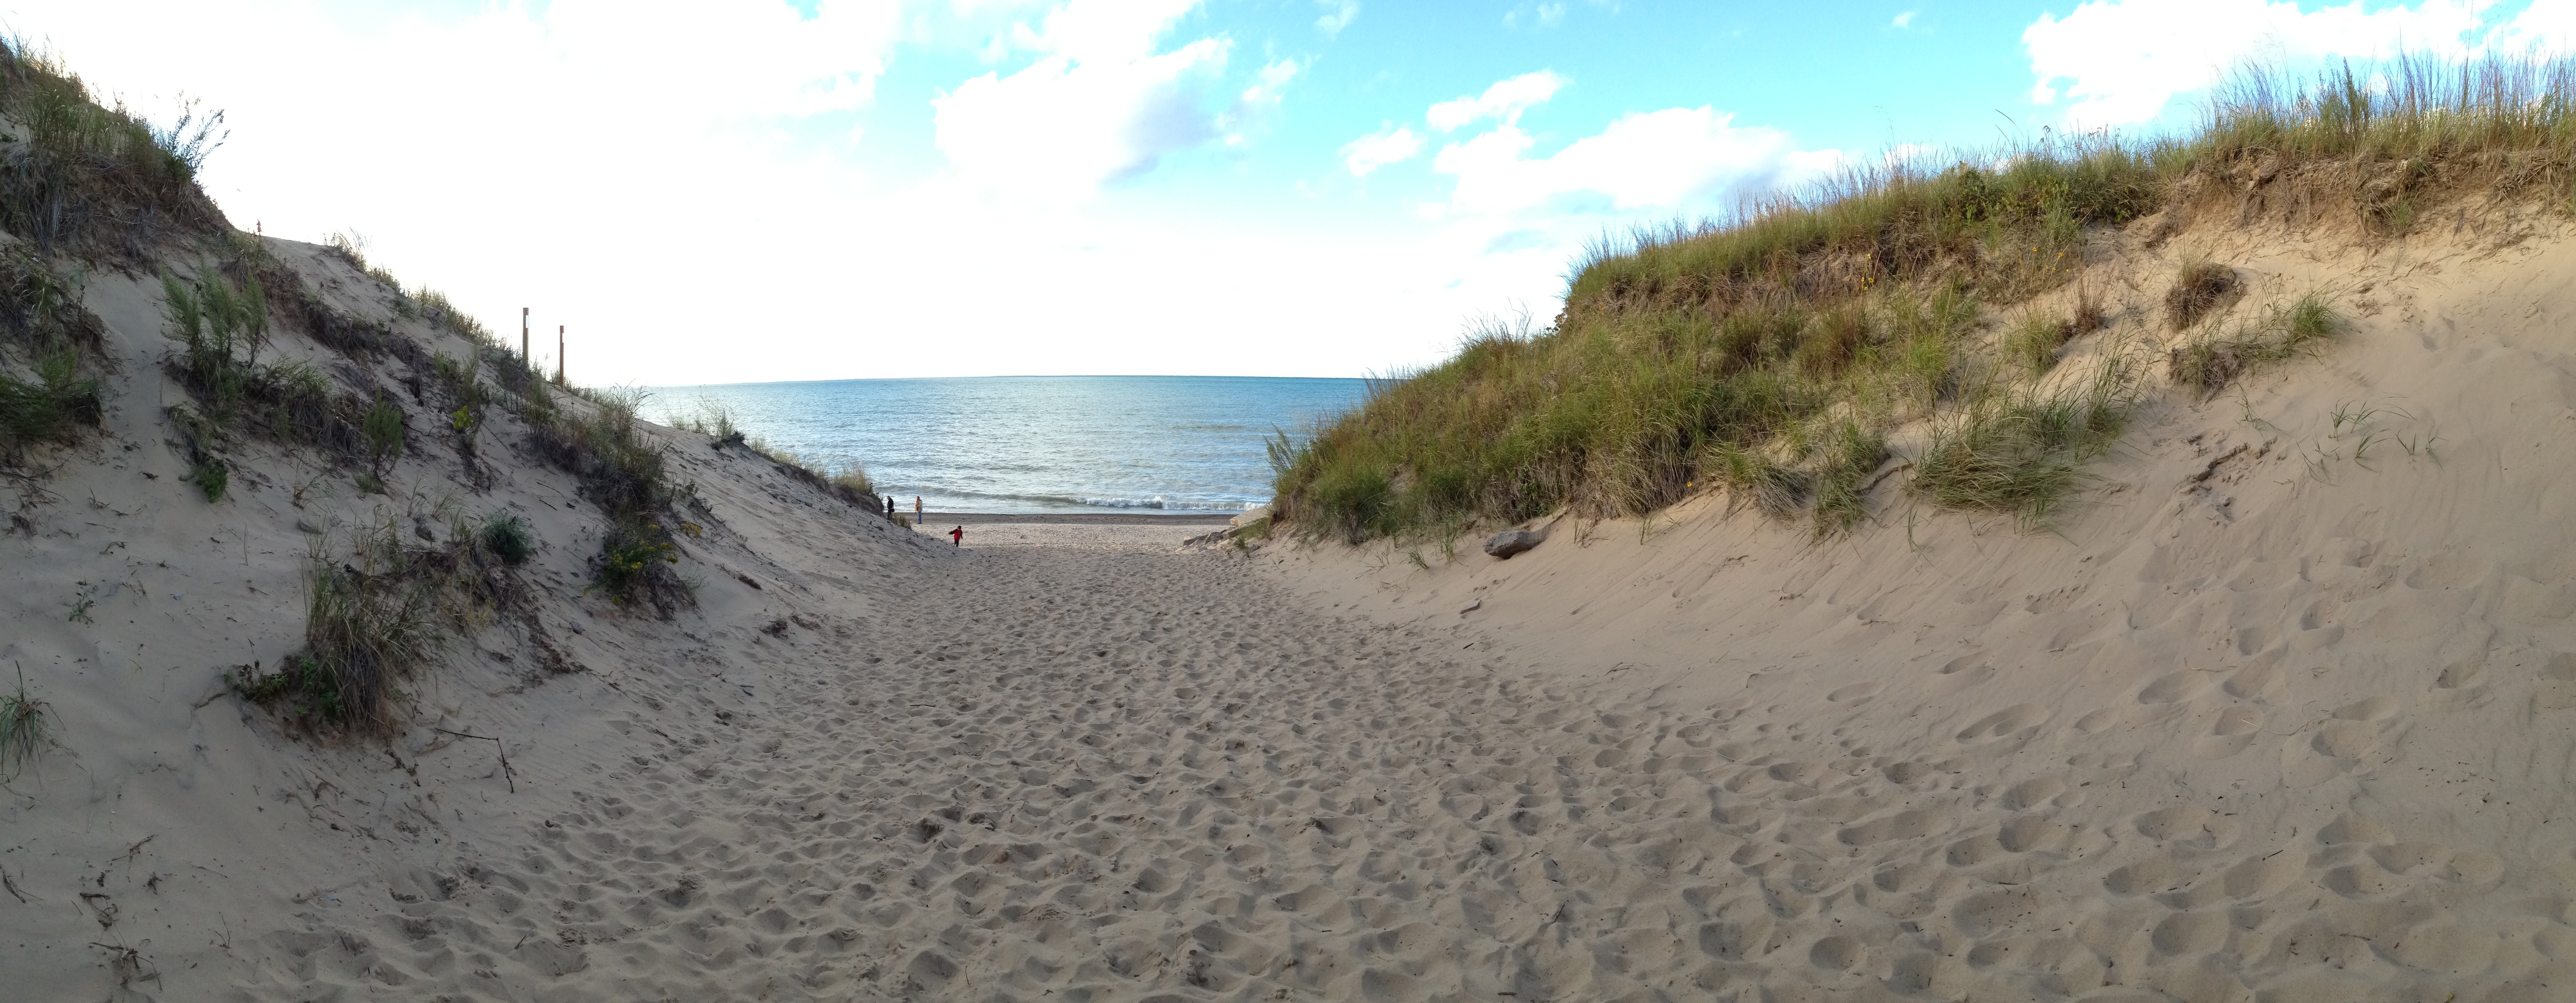 iPhone 5c Panorama (Beach)